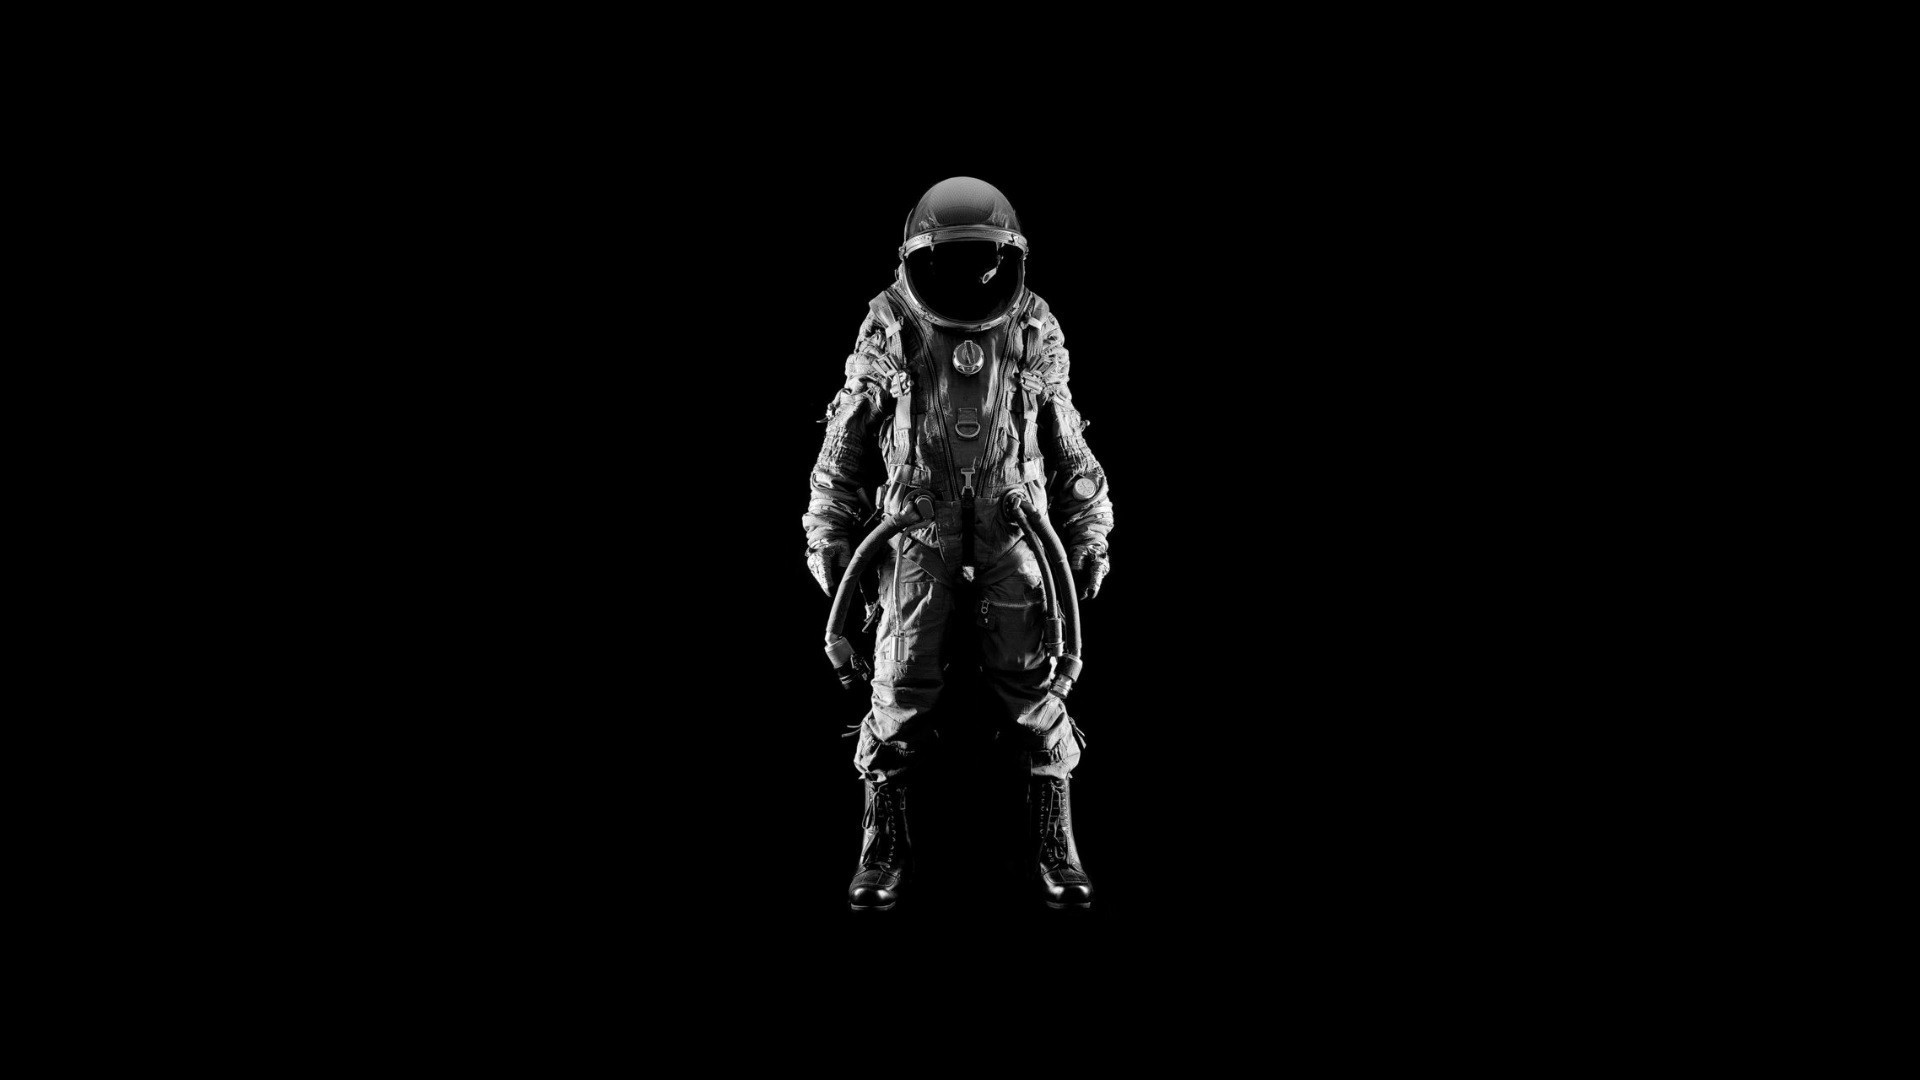 General 1920x1080 digital art black background minimalism astronaut helmet spacesuit monochrome boots simple background